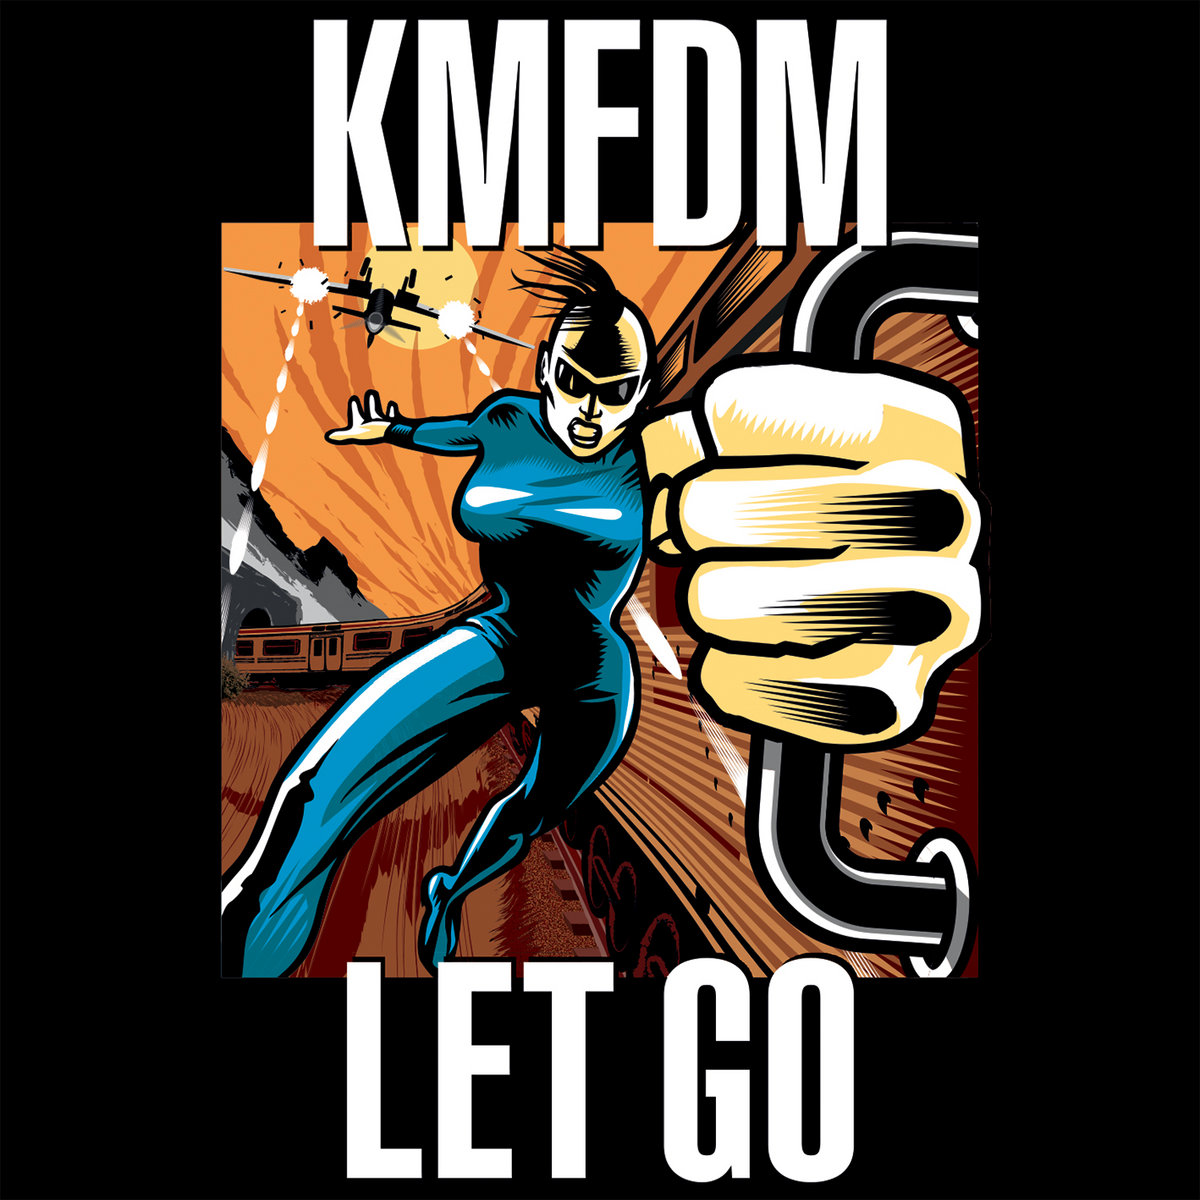 KMFDM, “Let Go”